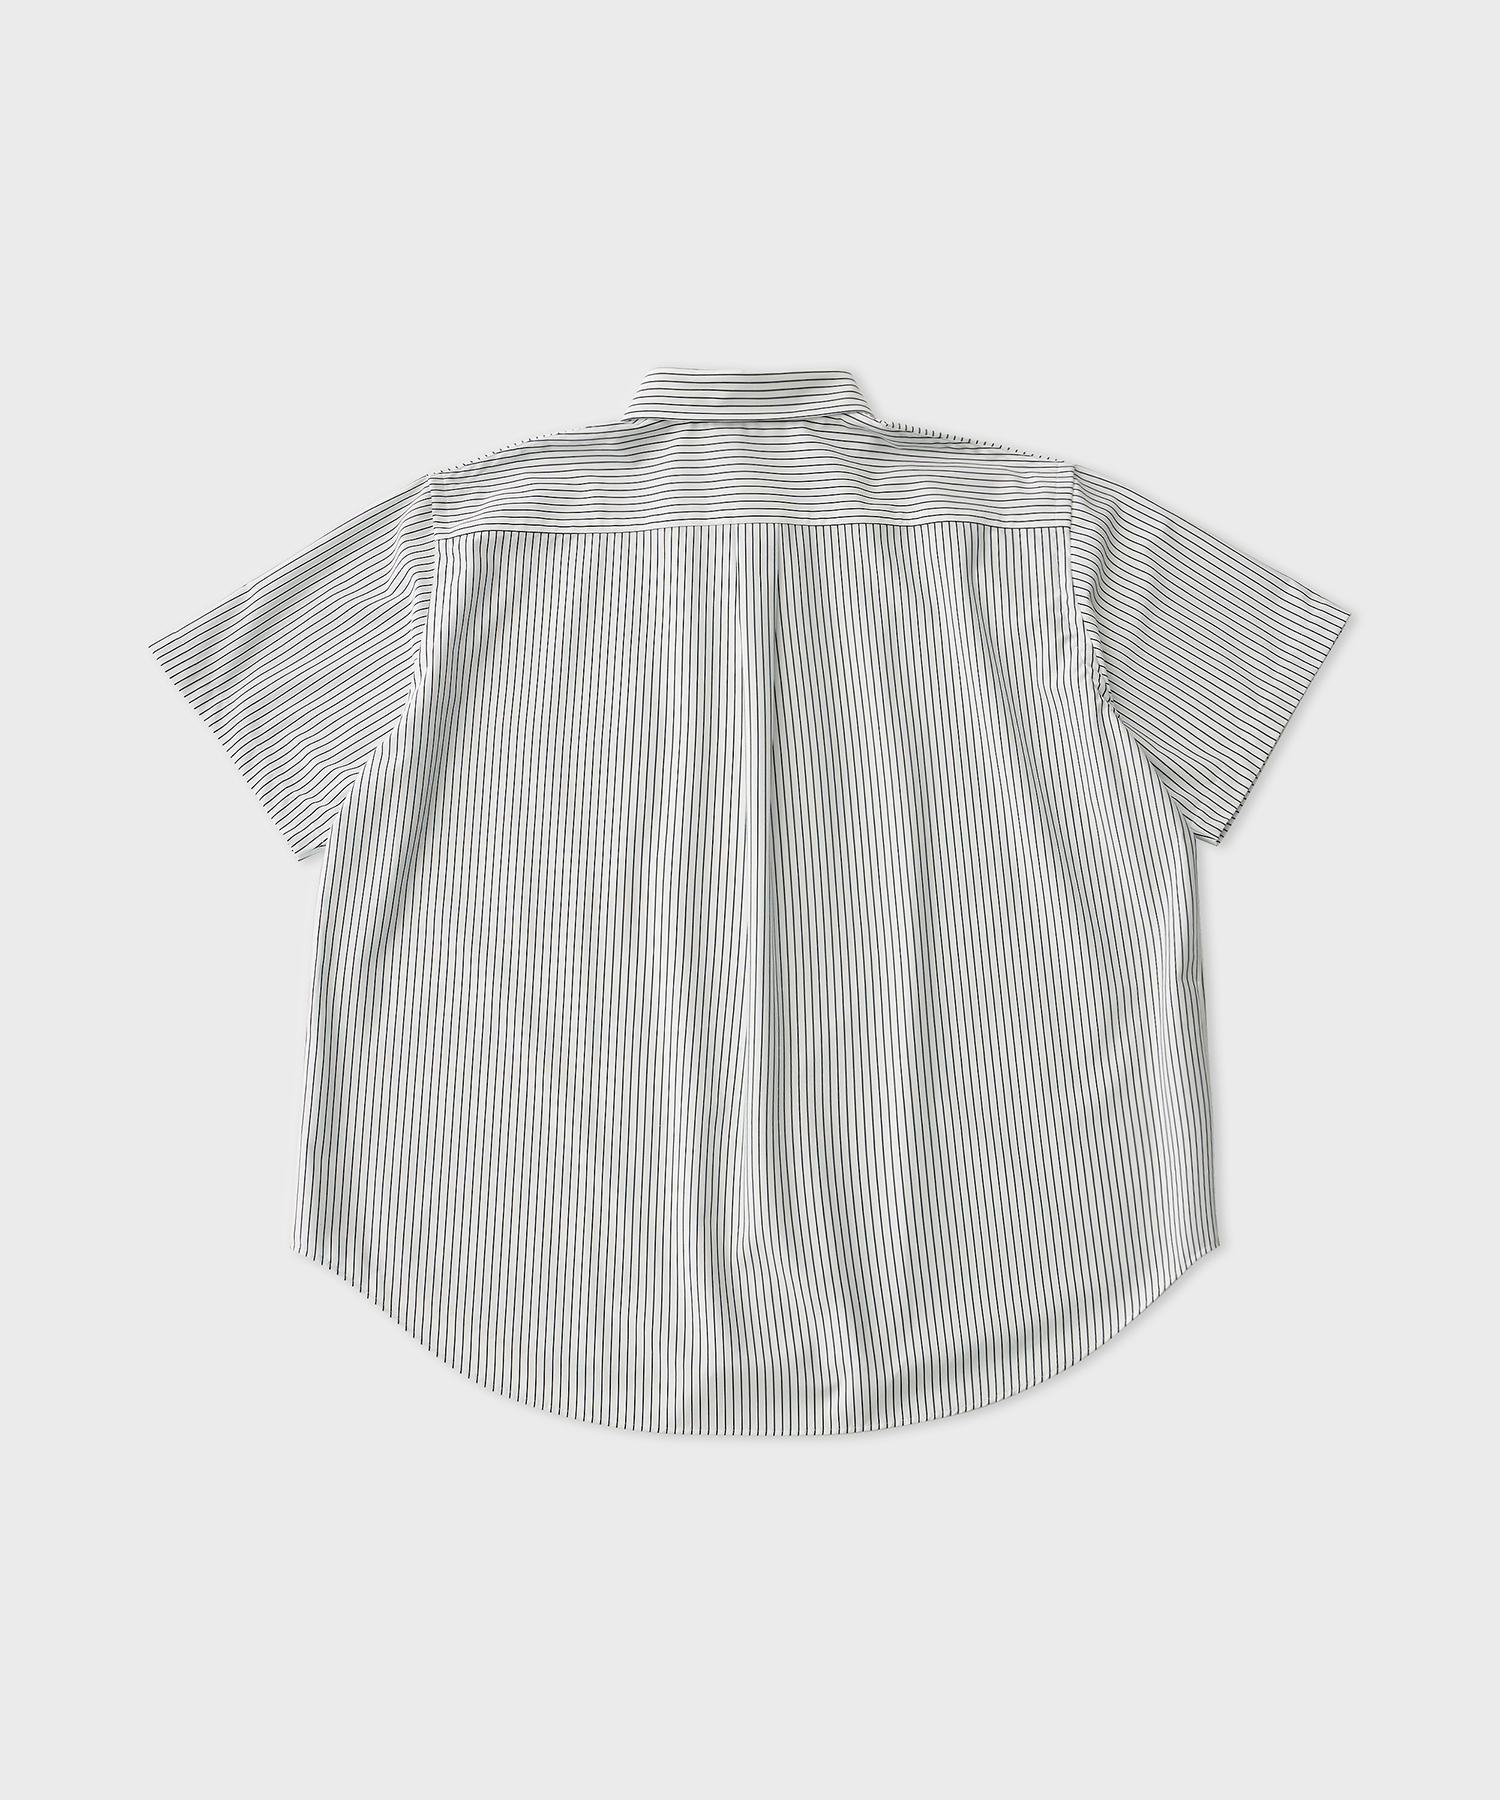 Pencil Stripe Dress Jersey Shirt Short Sleeve (White Navy)